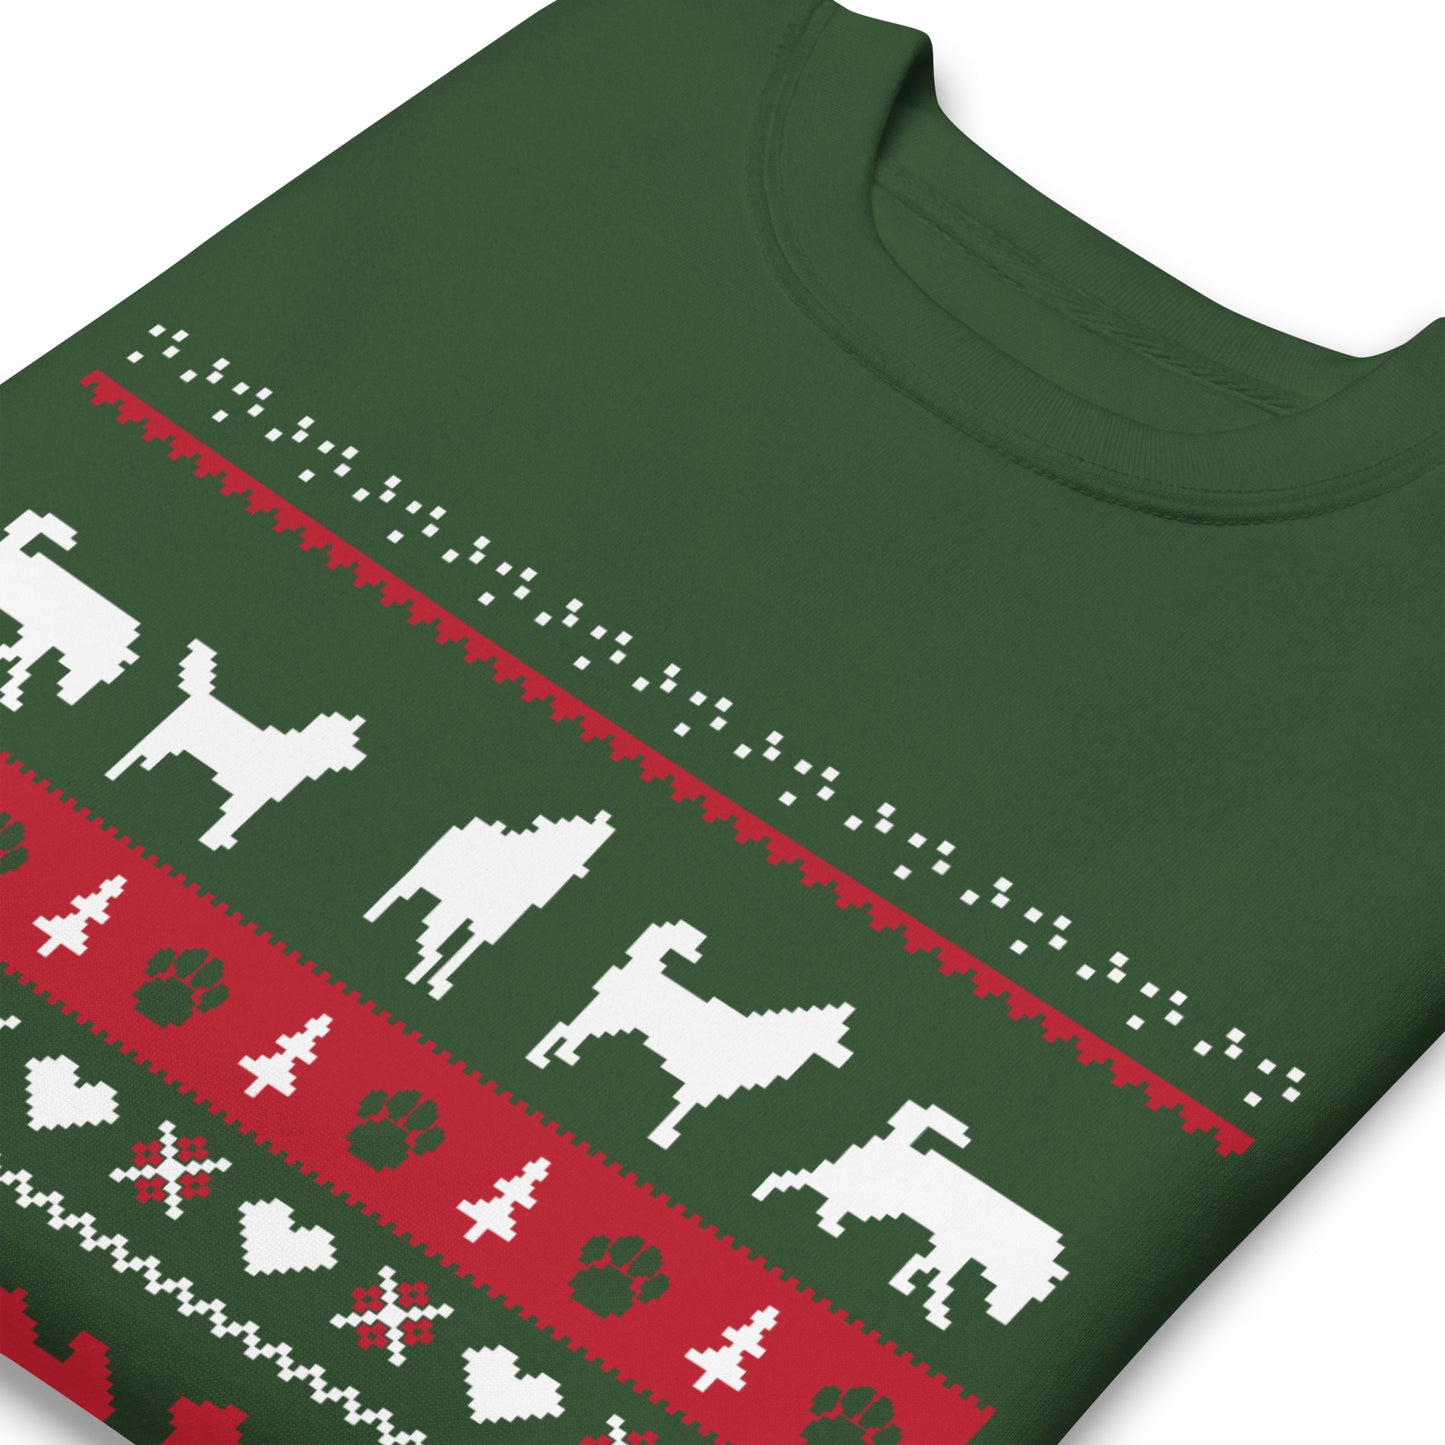 Ugly Sweater Inspired Crewneck - Siberian Husky, Alaskan Malamute - Sweatshirt